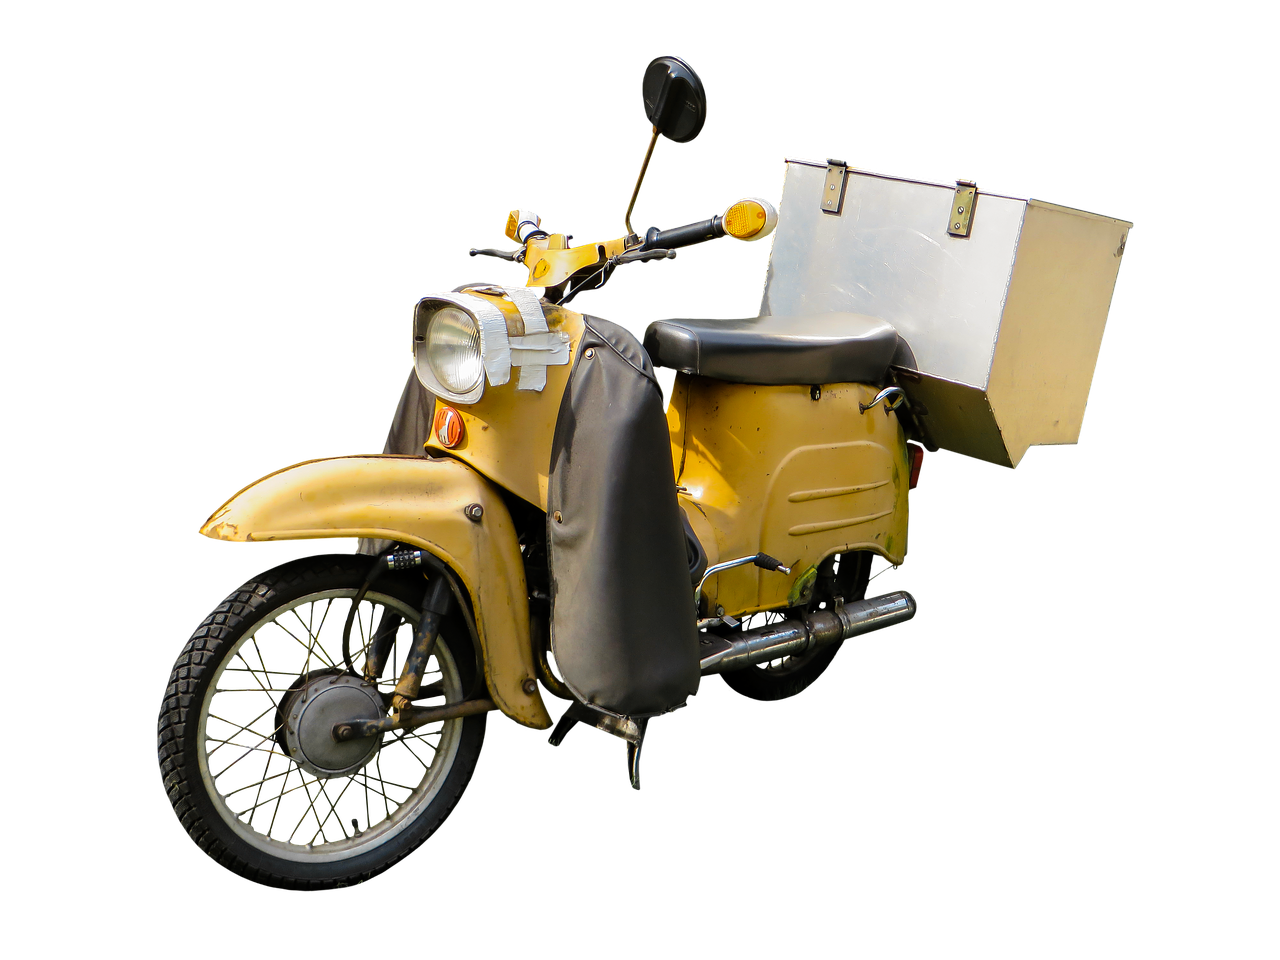 moped krad vehicle free photo